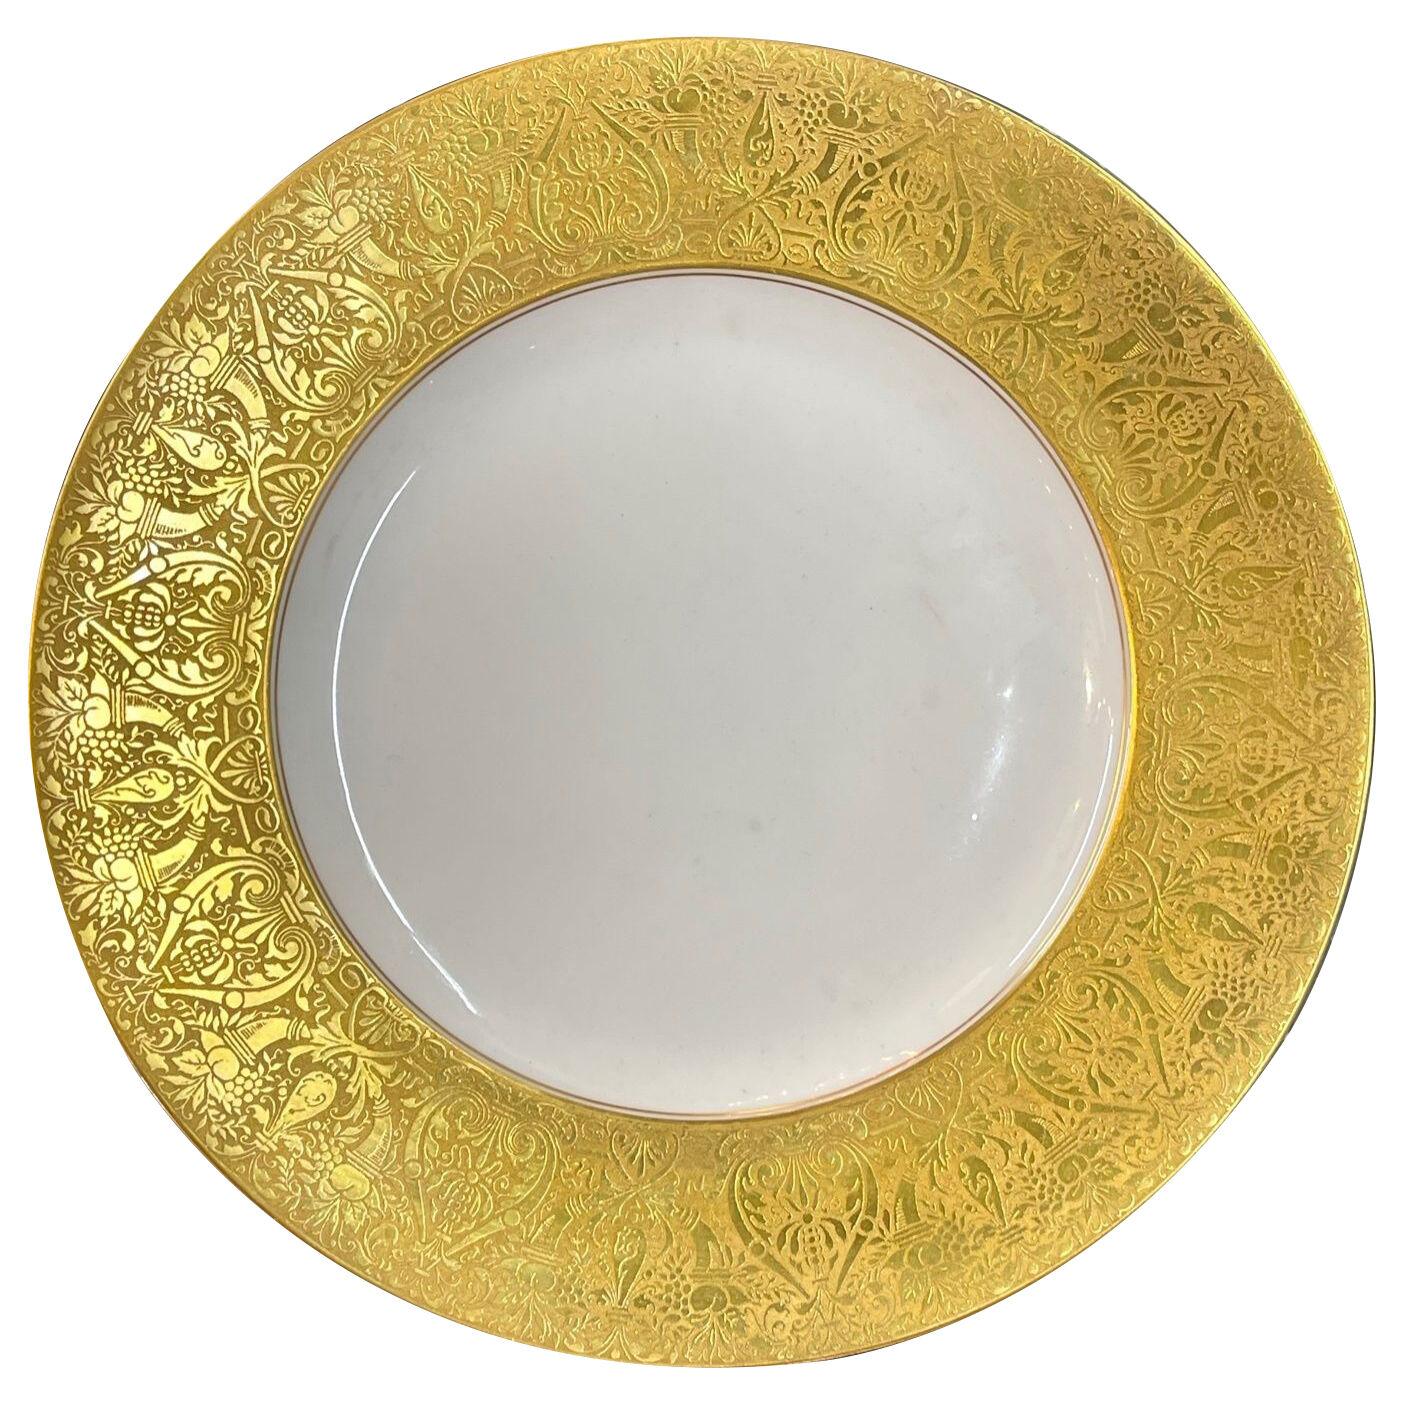 Set of 10 Royal Bavarian Gold Encrusted Service Plates